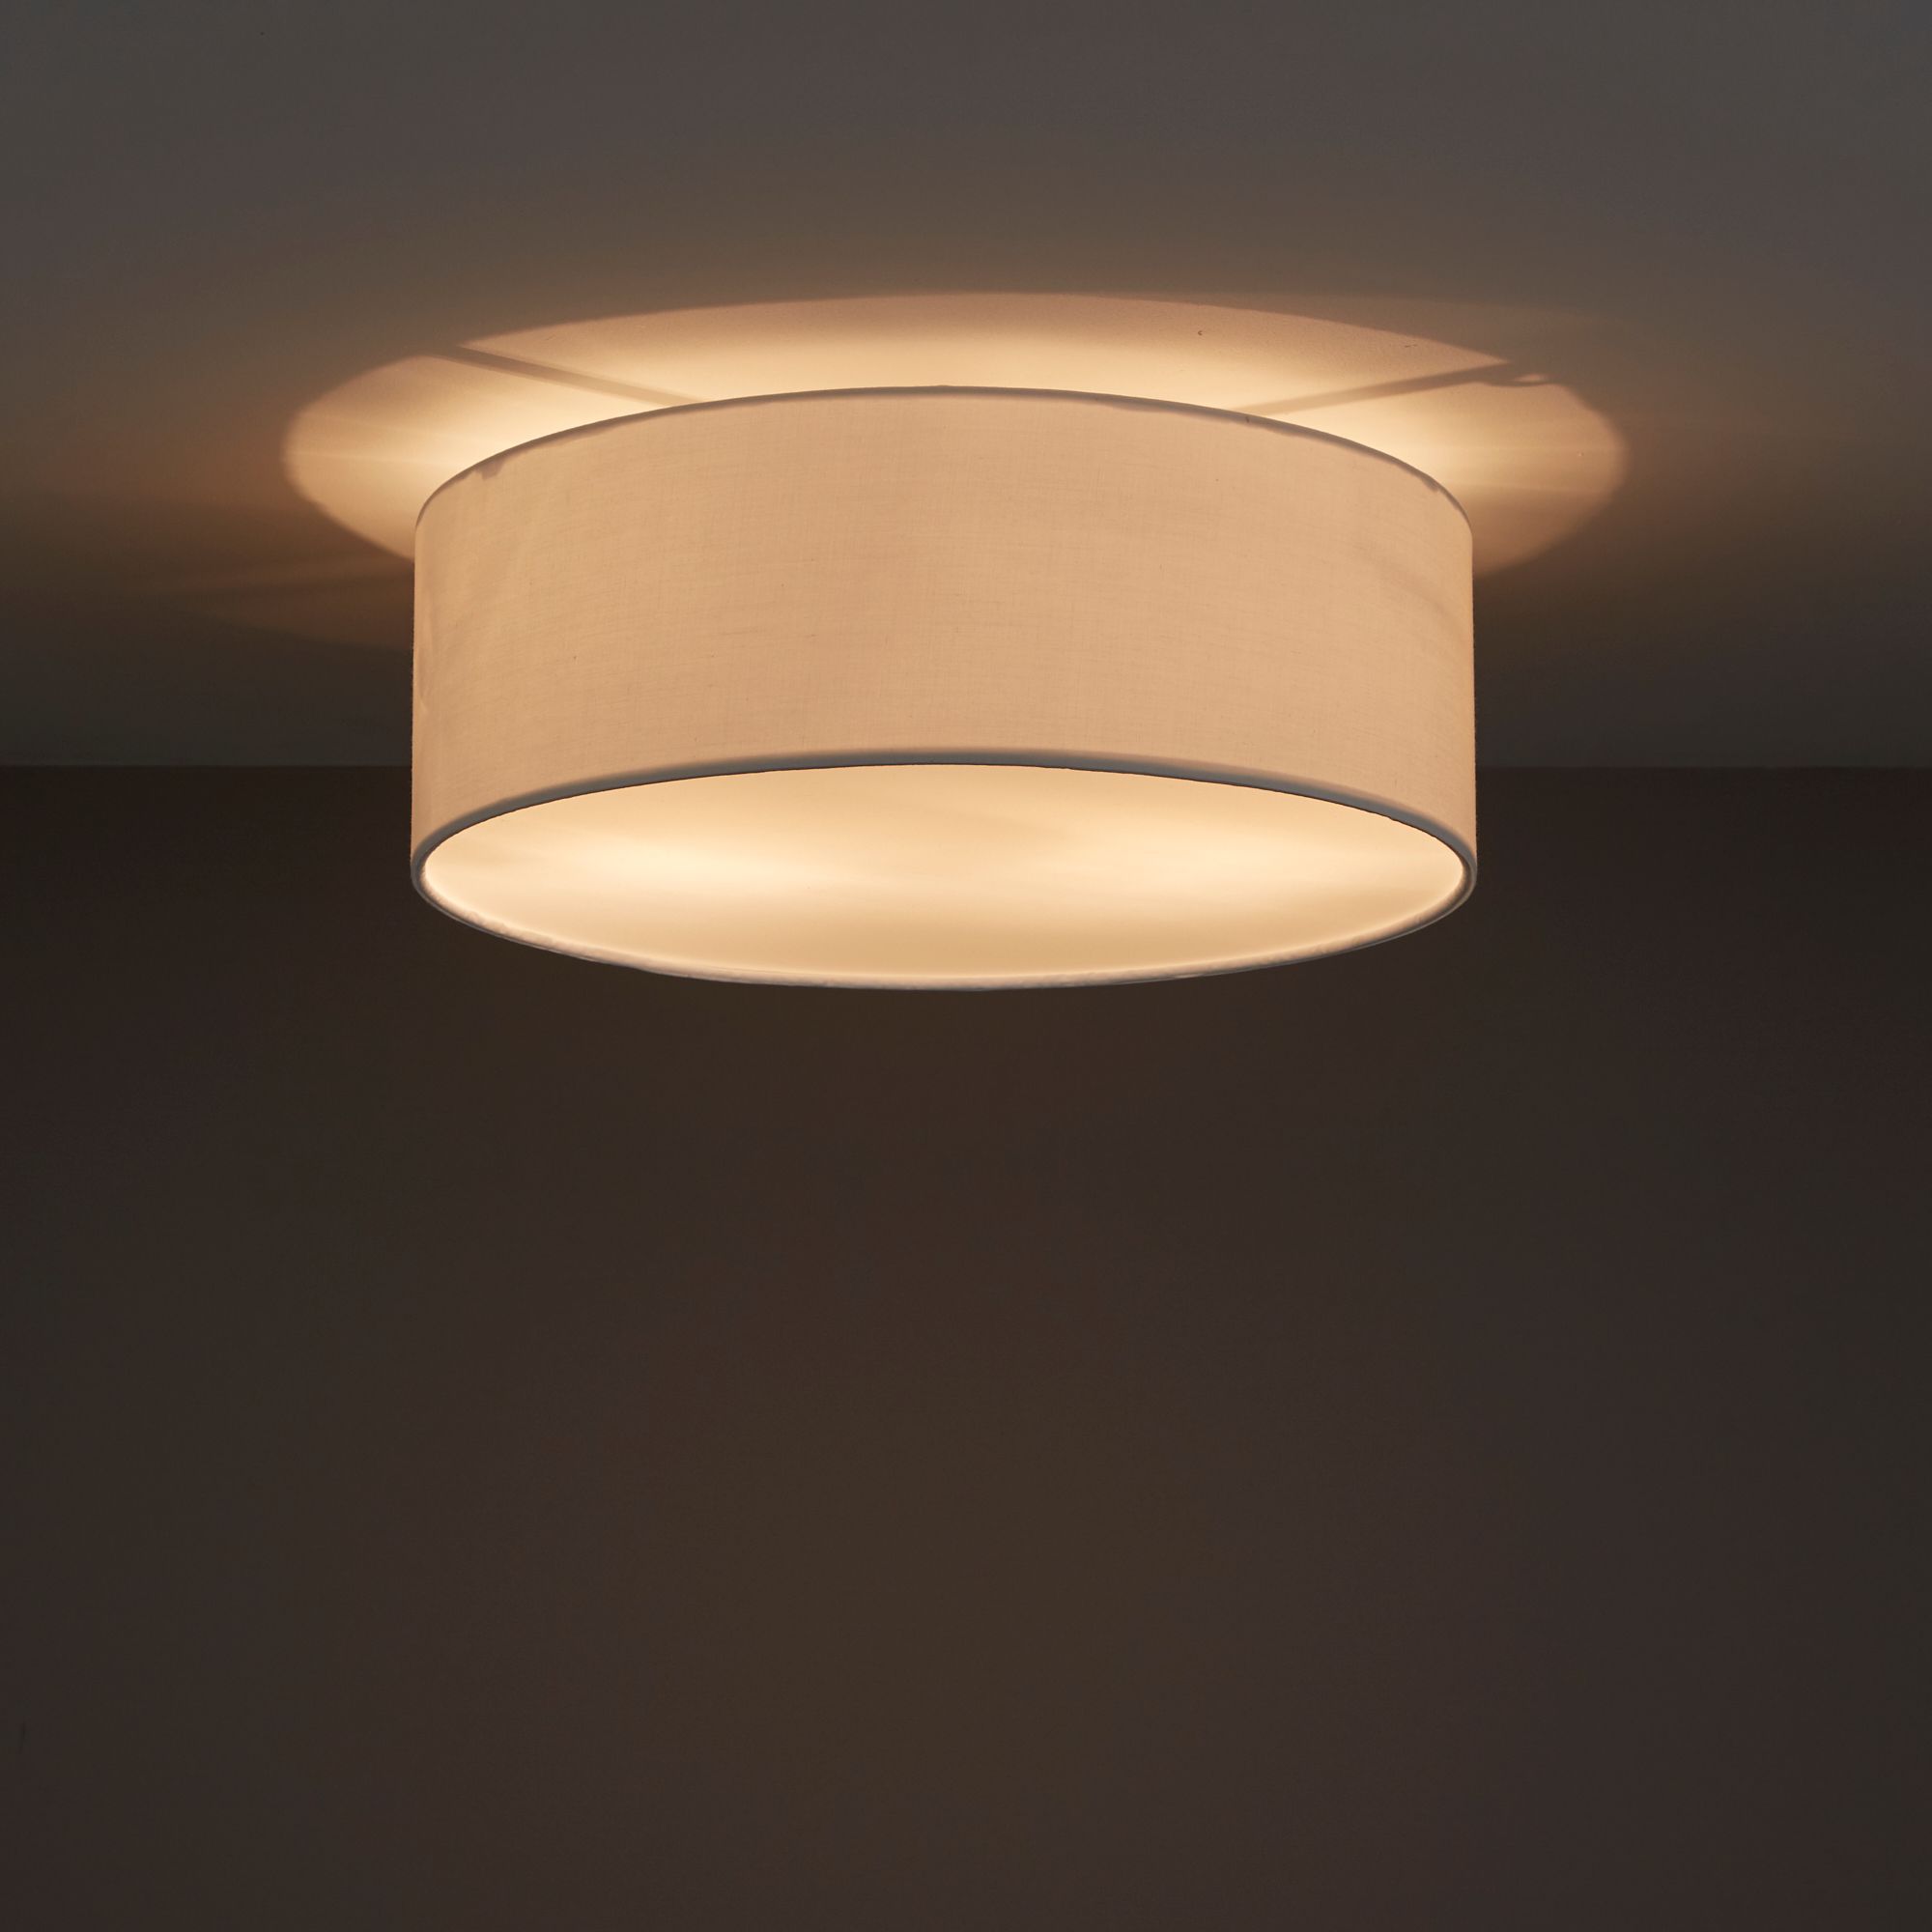 Cream 2 Lamp Ceiling Light | Ceiling, Master bedroom design and Lights